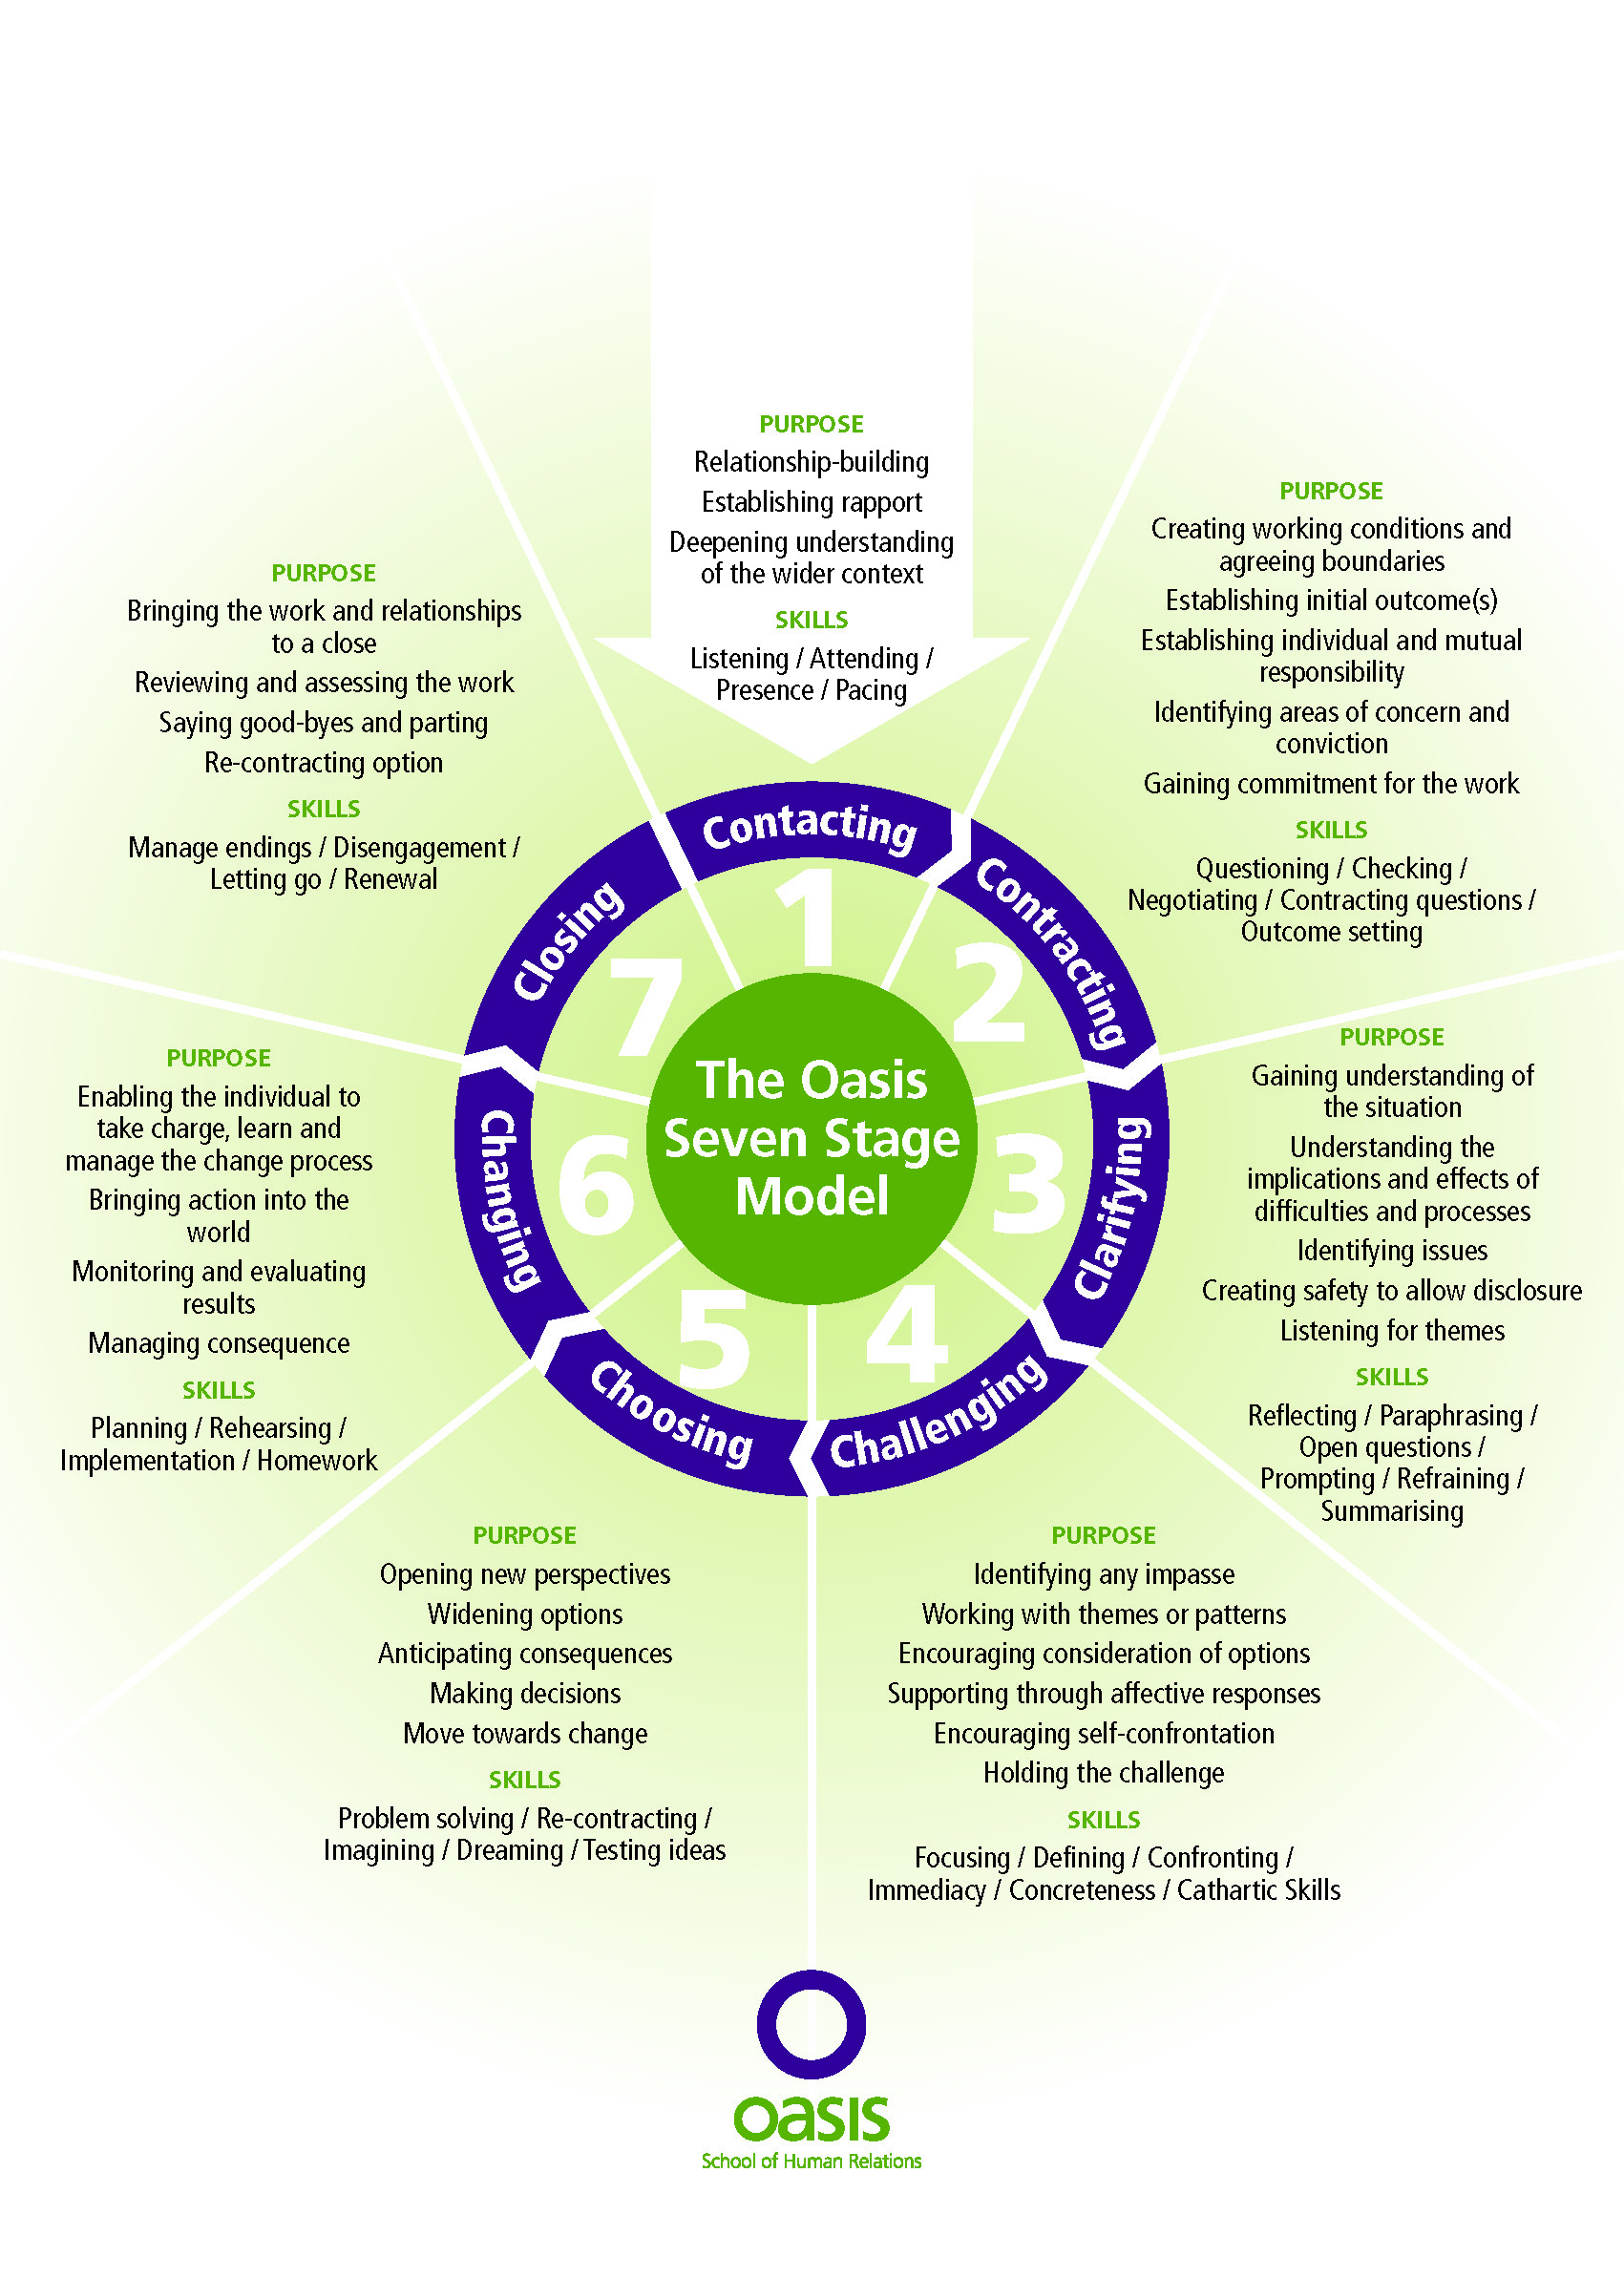 Oasis Seven Stage Model for managing change